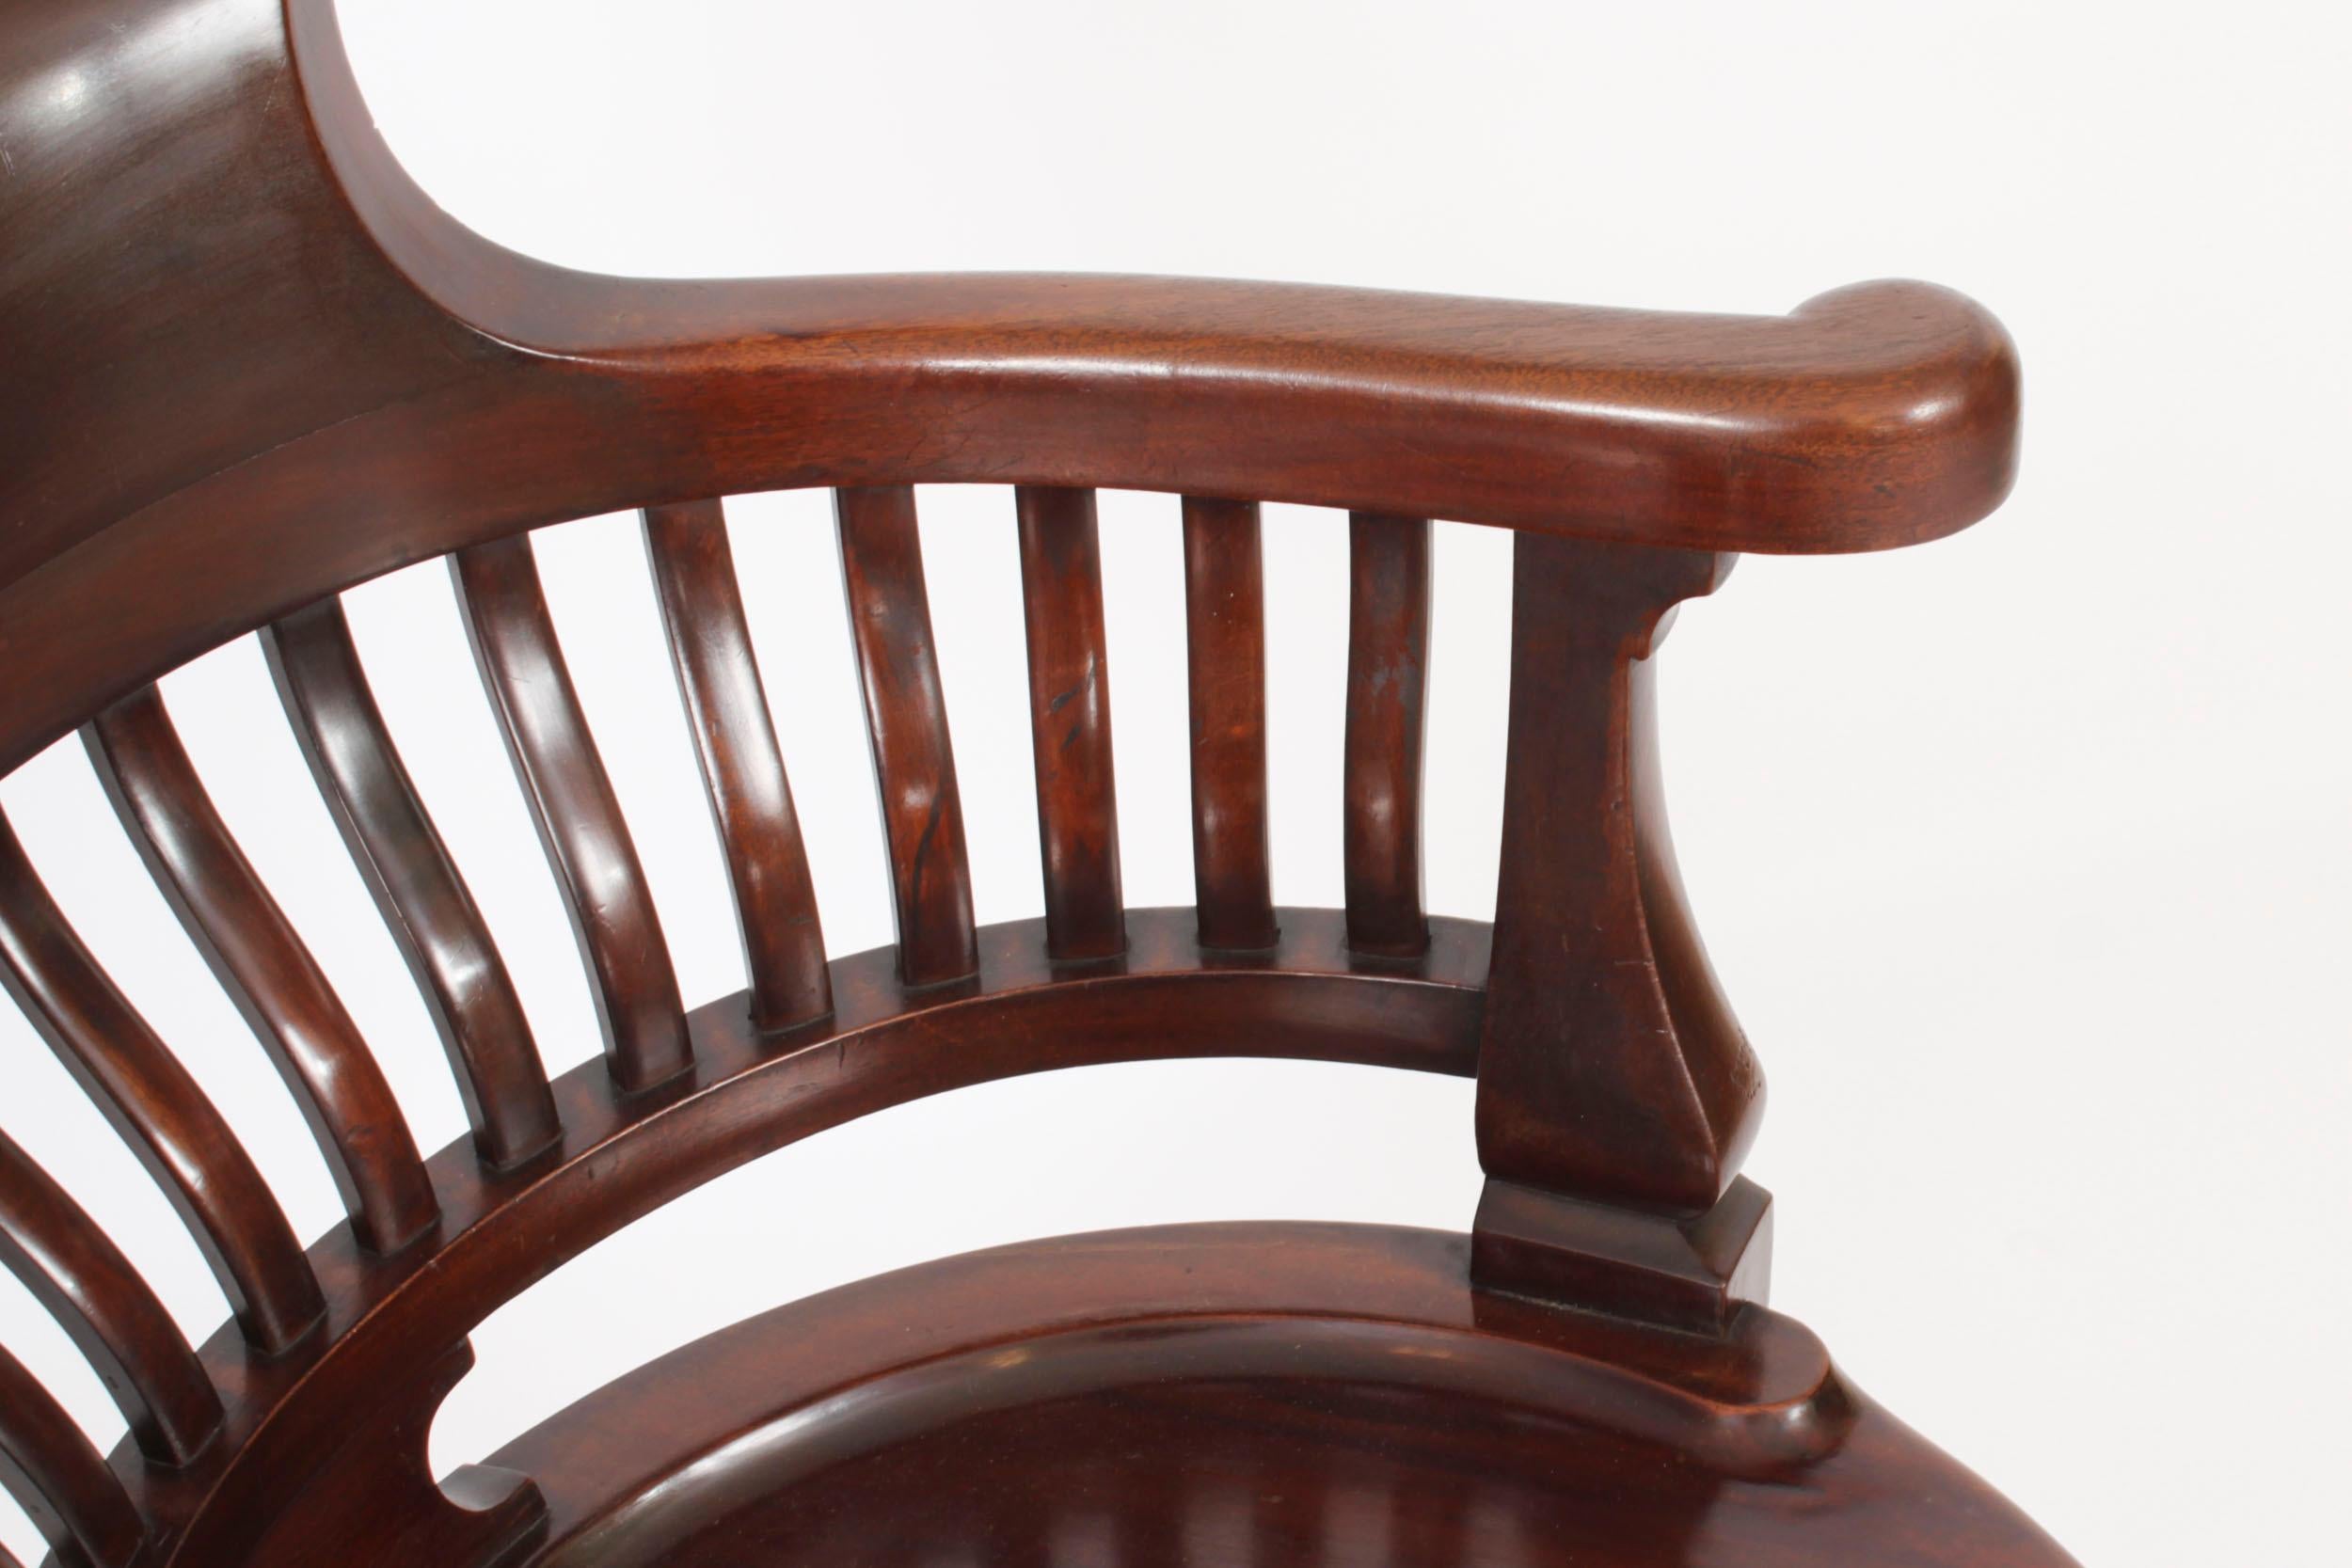 Antique Victorian Walnut Revolving Desk Chair c.1880 19th Century For Sale 2